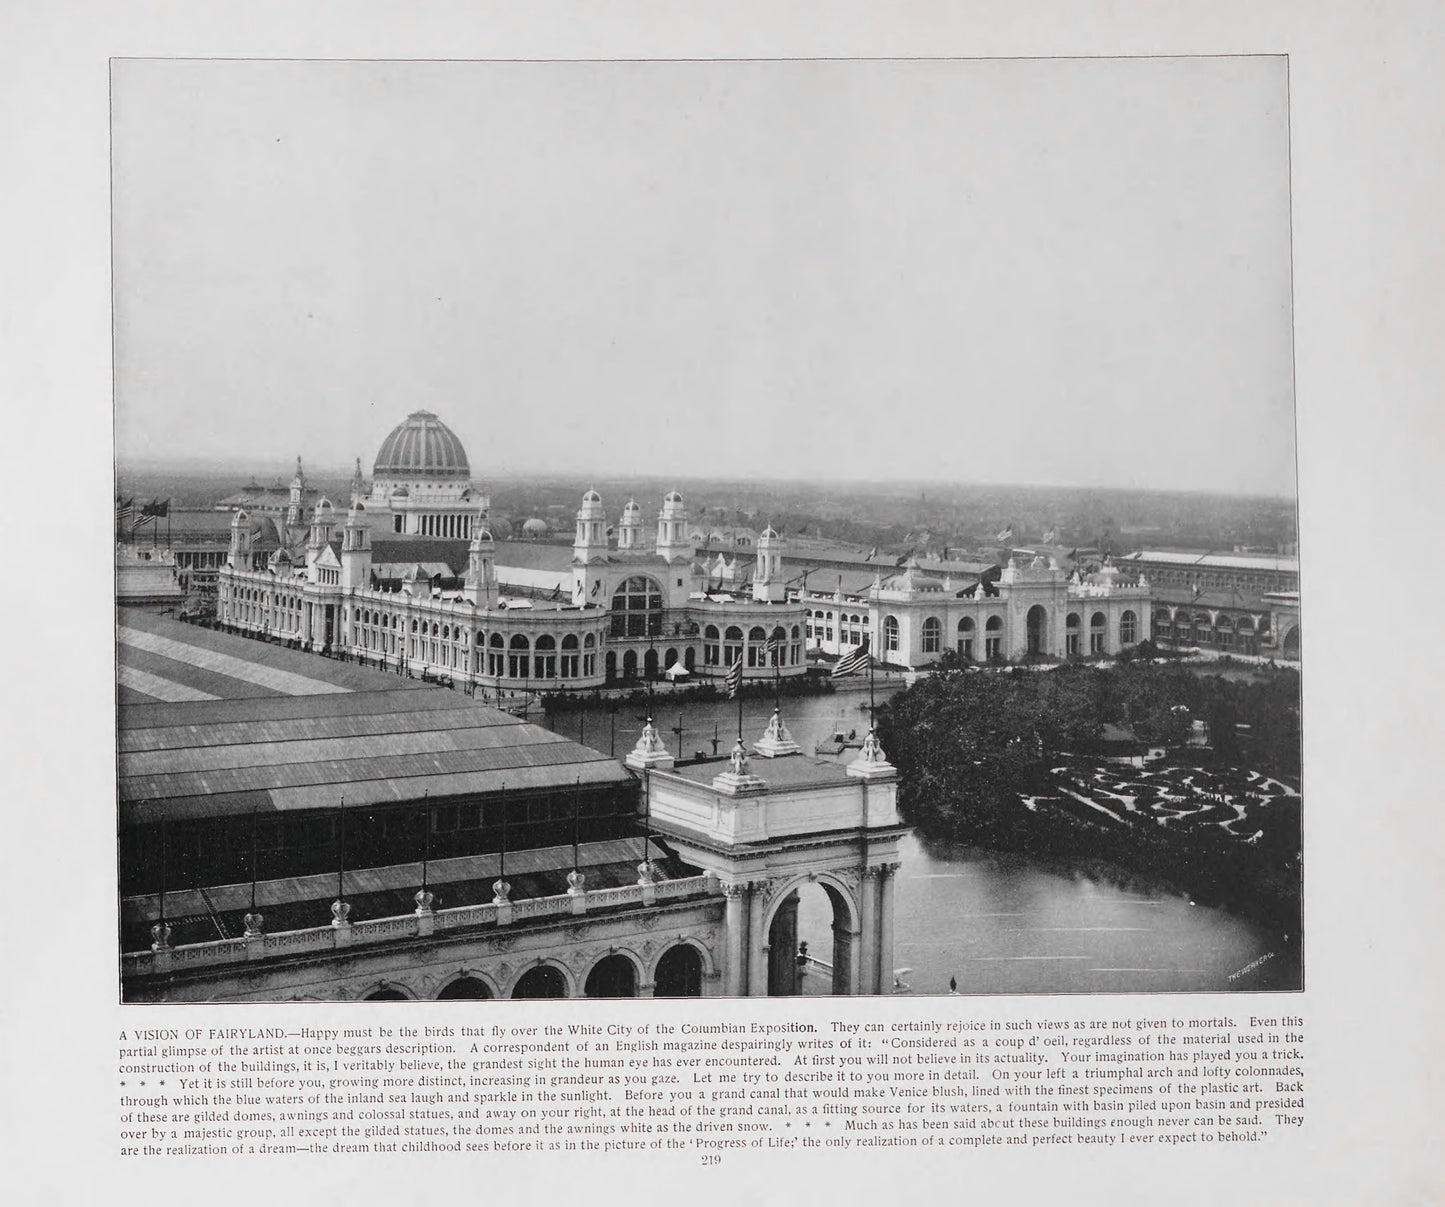 1893 Columbian Exposition - Chicago’s World’s Fair